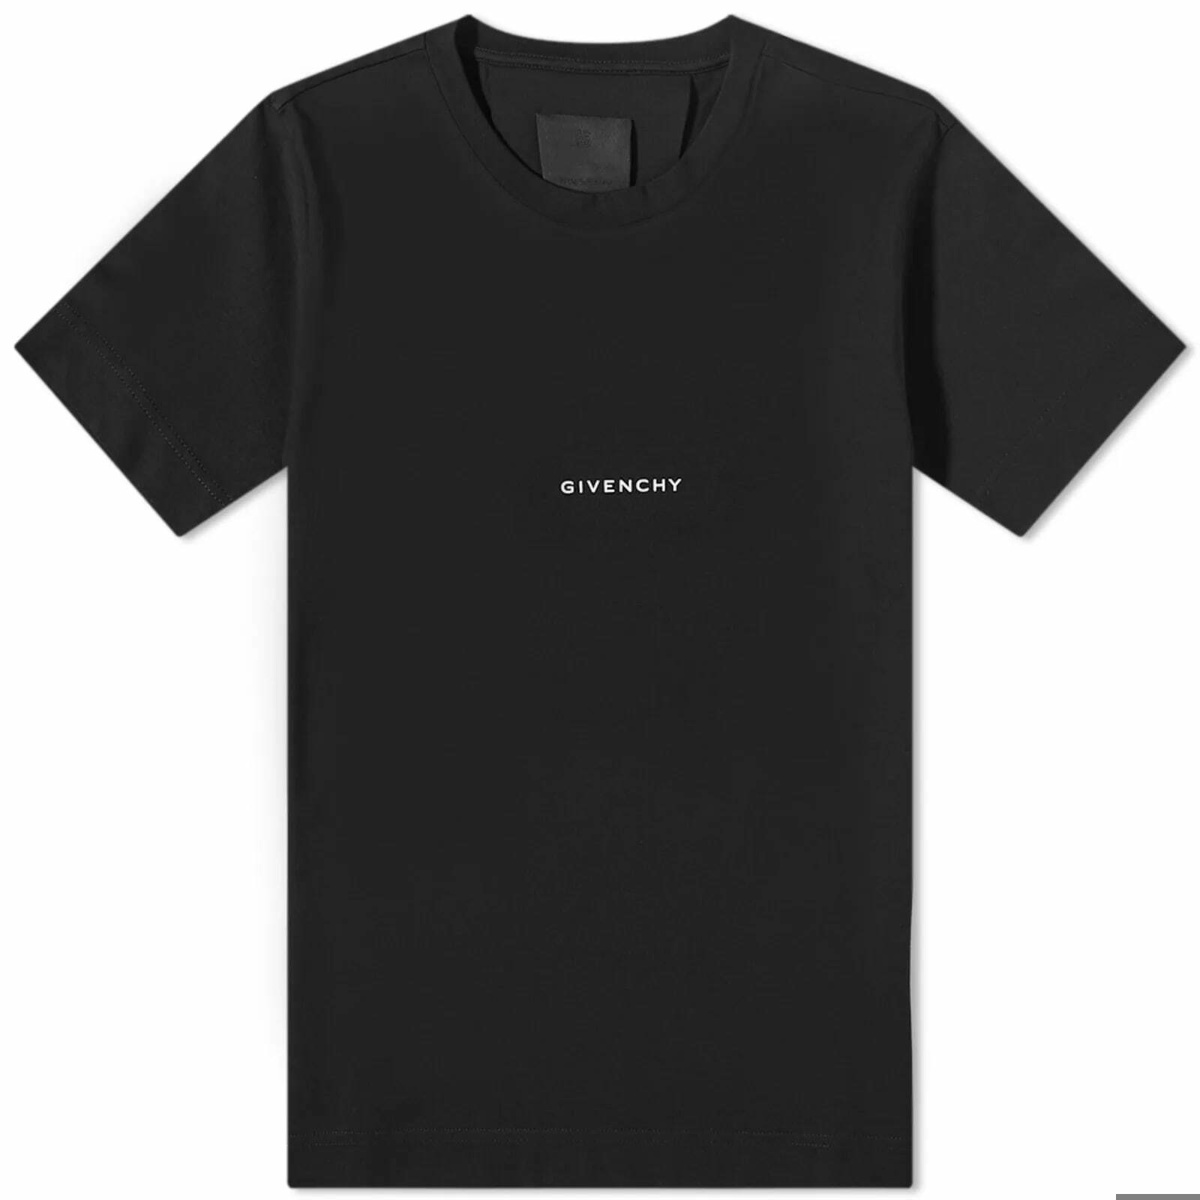 Givenchy Men's G Logo T-Shirt in Black Givenchy